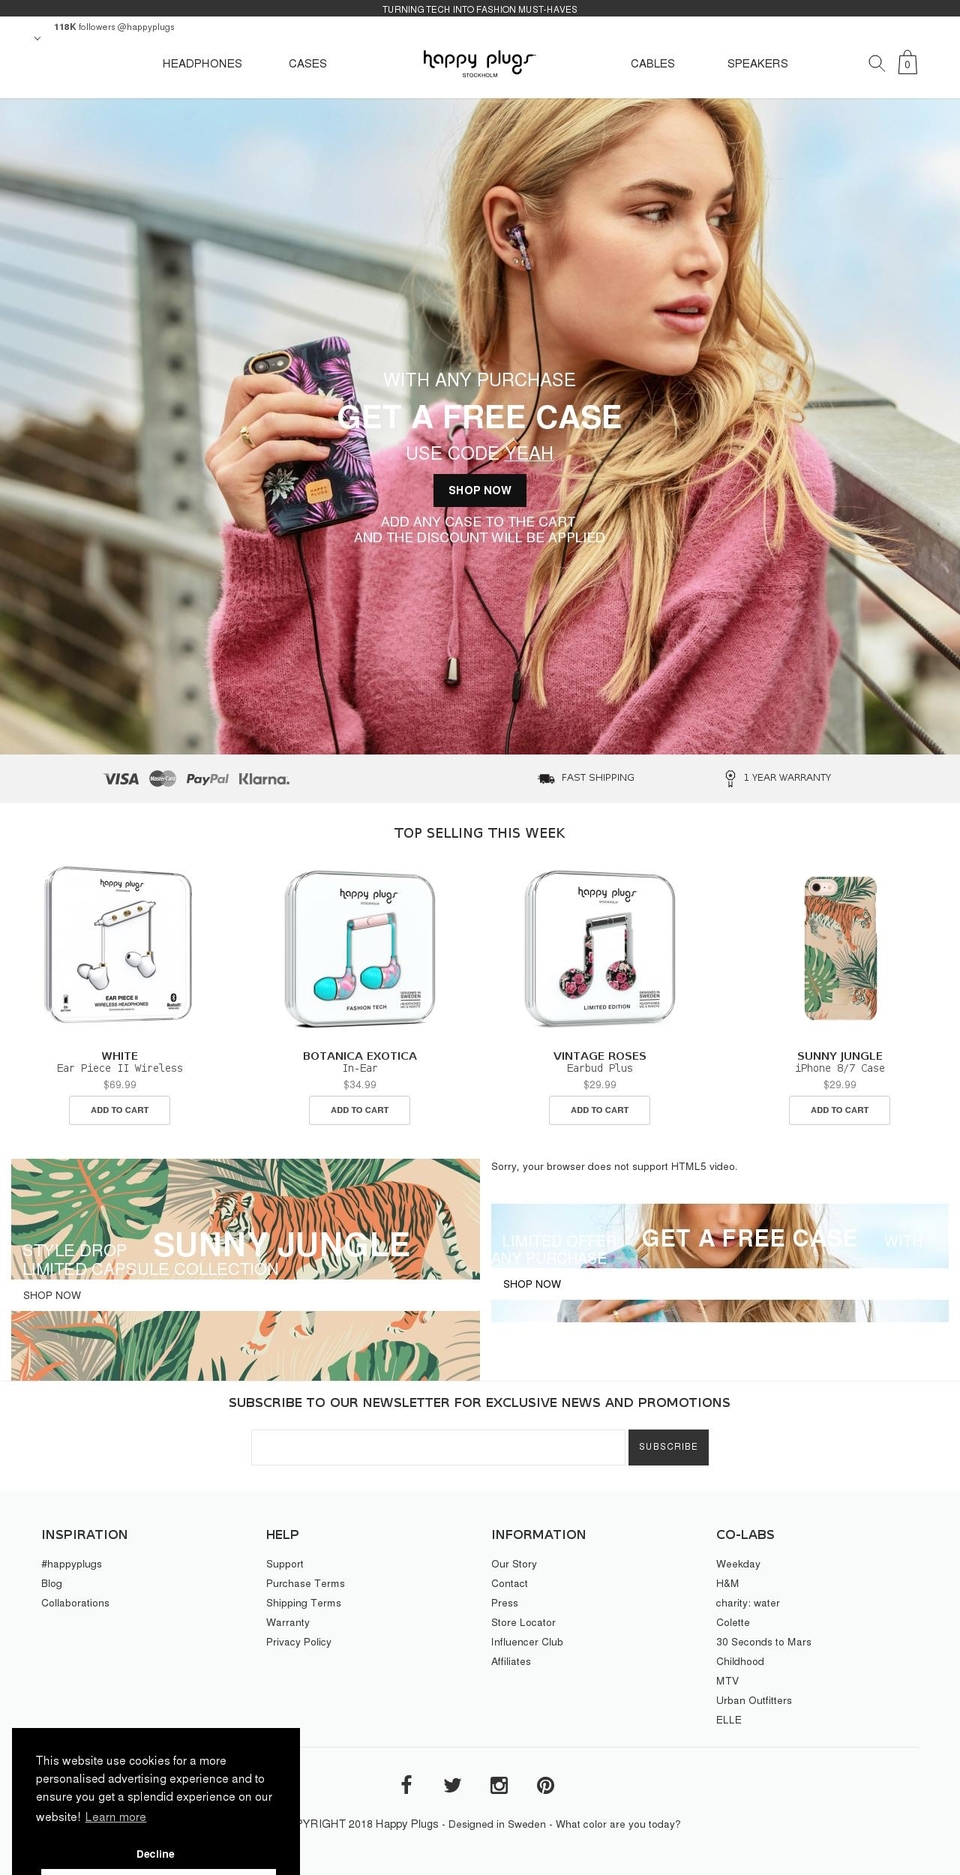 happyplugs.mx shopify website screenshot